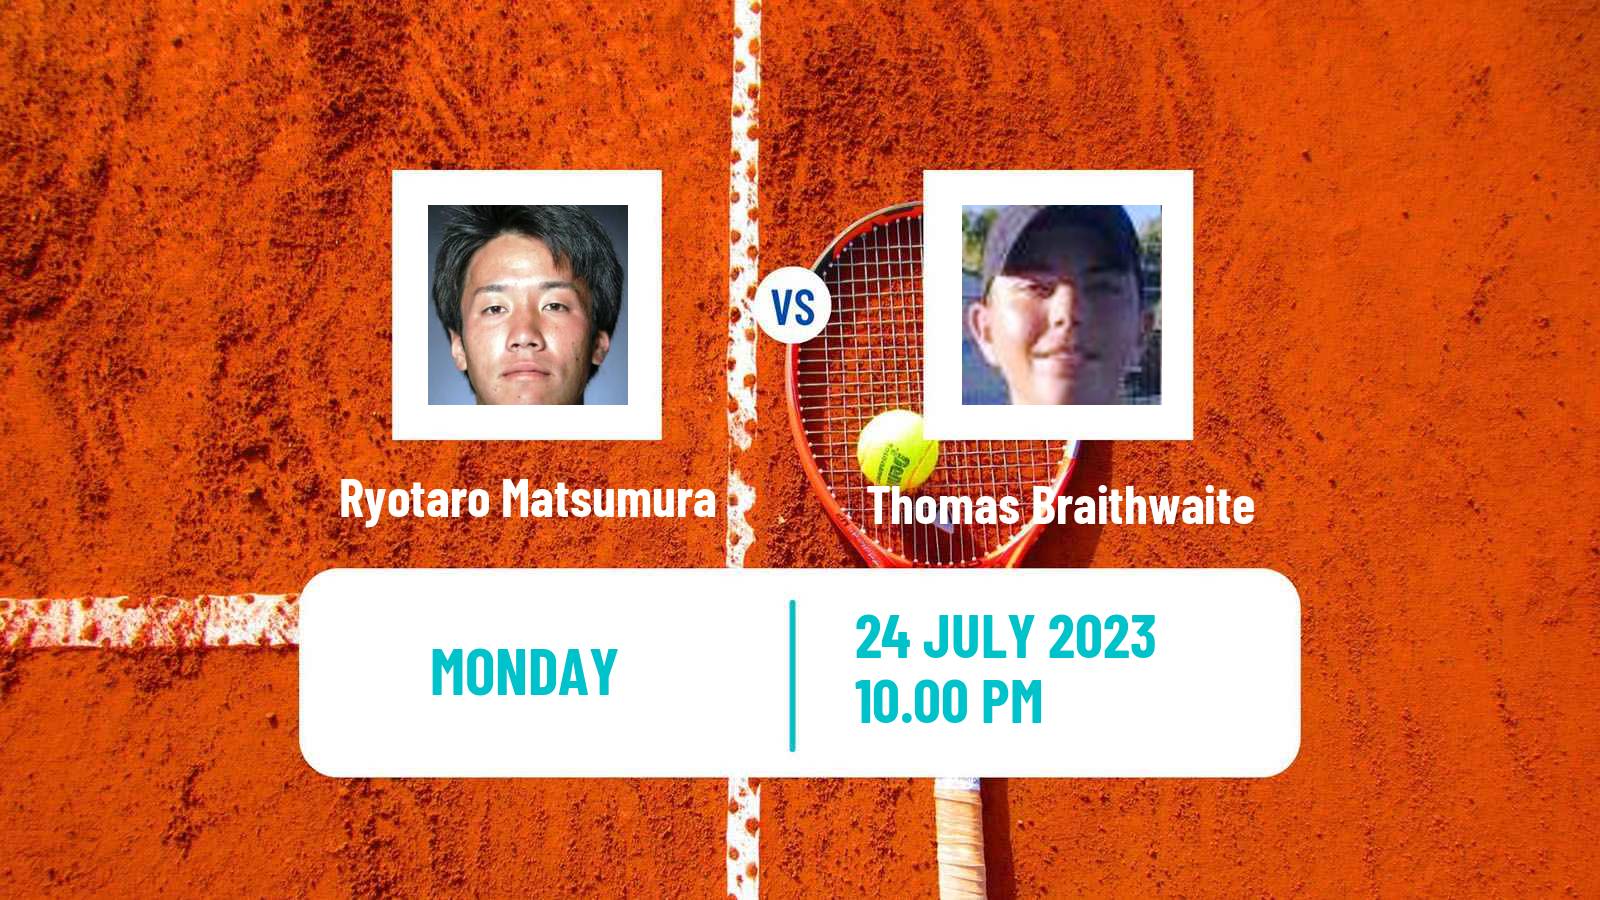 Tennis ITF M15 Caloundra Men Ryotaro Matsumura - Thomas Braithwaite